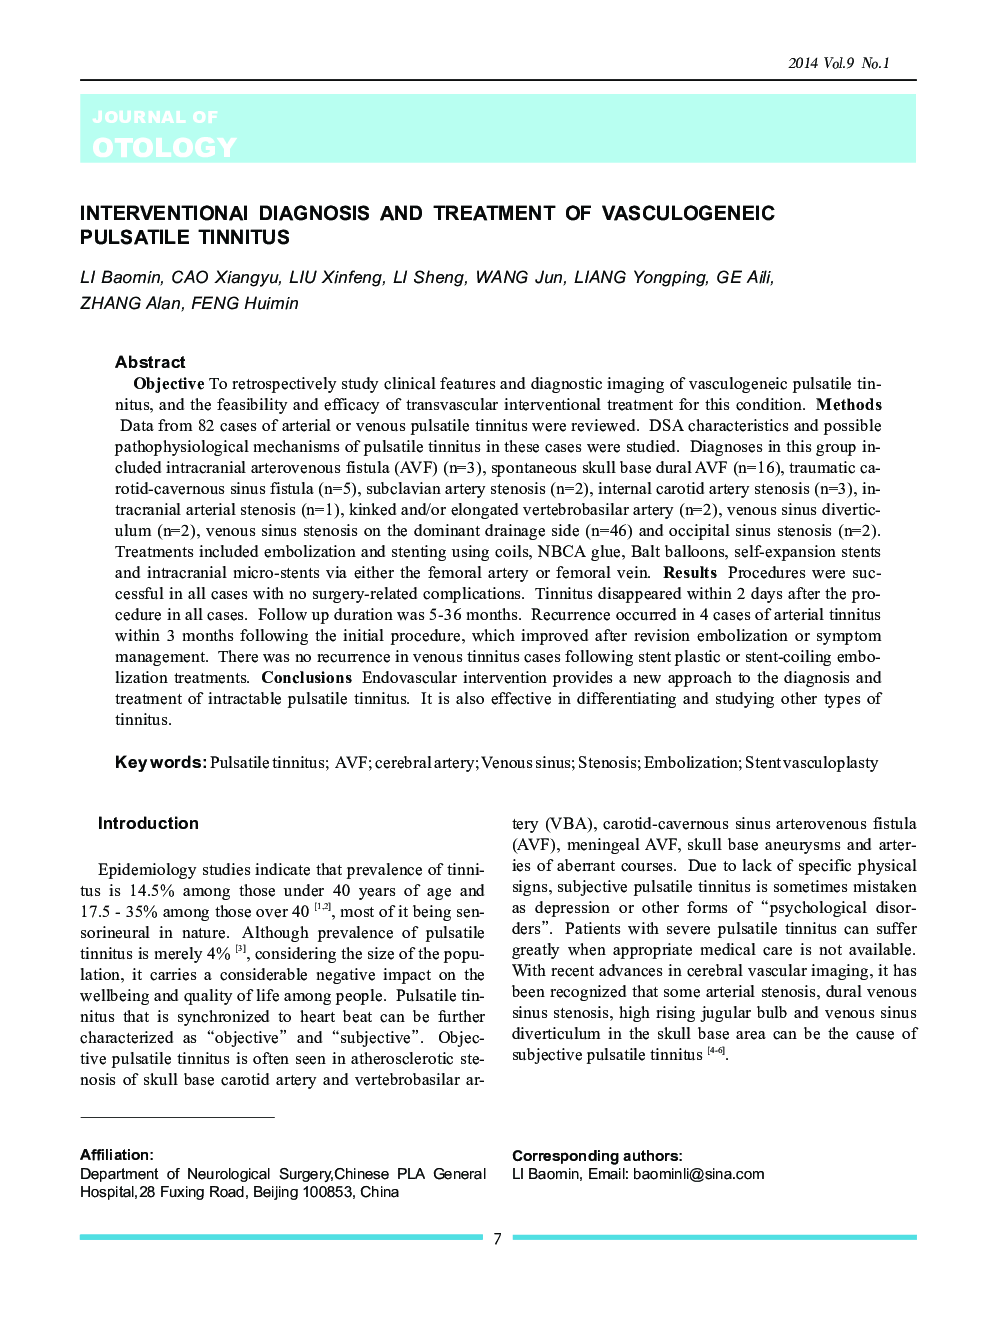 Interventionai Diagnosis and Treatment of Vasculogeneic Pulsatile Tinnitus